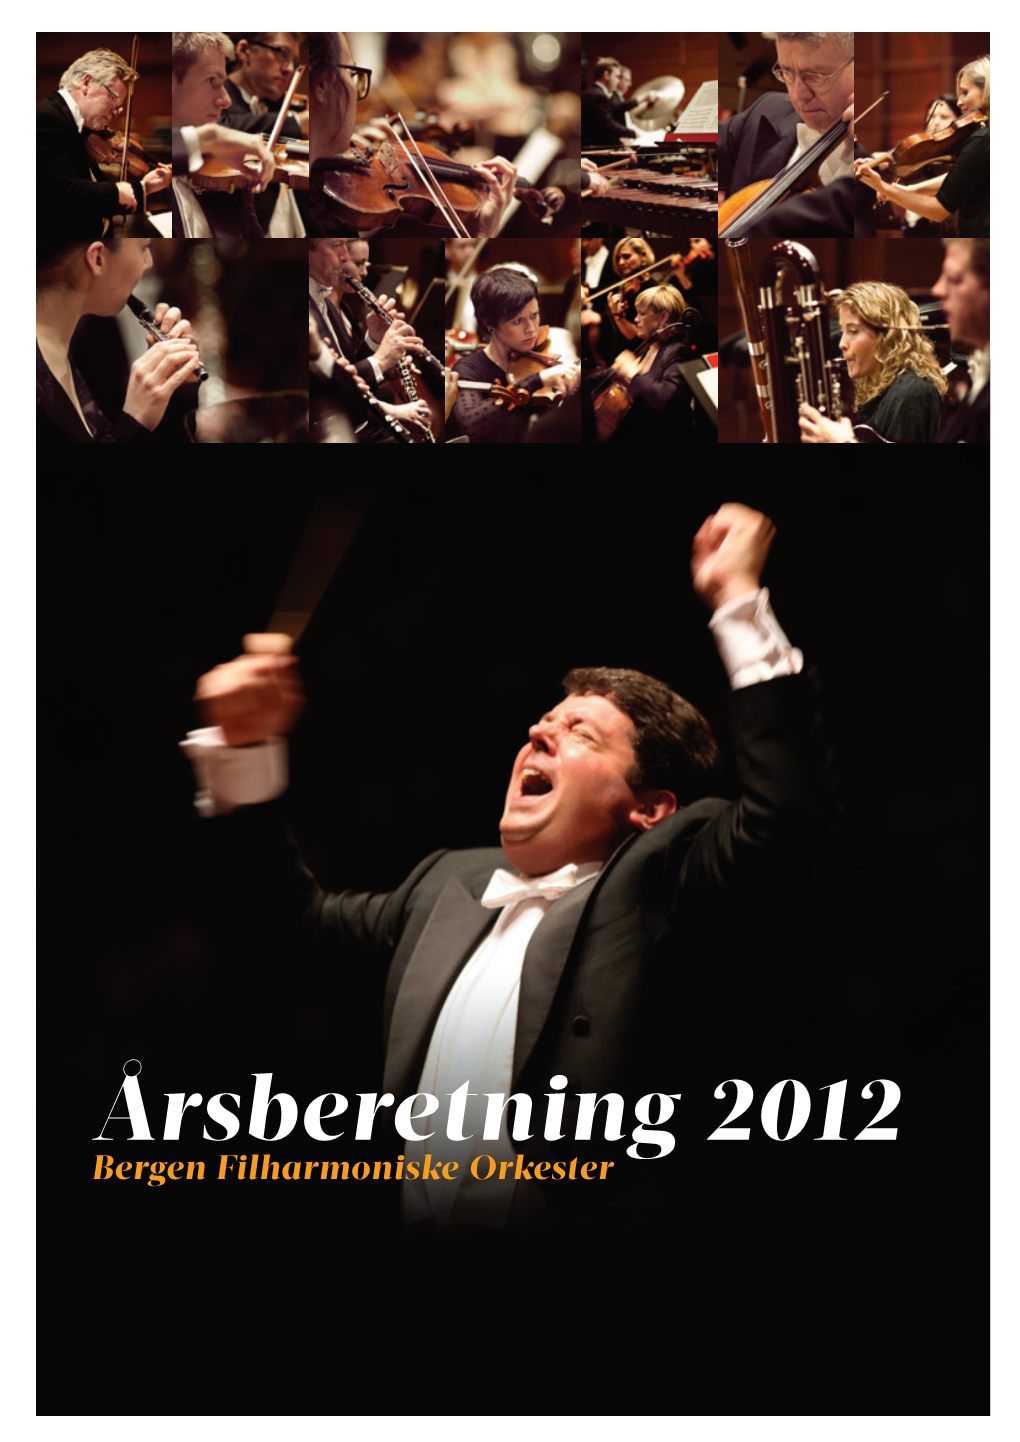 Årsberetning 2012 Bergen Filharmoniske Orkester 2 BERGEN FILHARMONISKE ORKESTER | ÅRSBERETNING 2012 Innhold